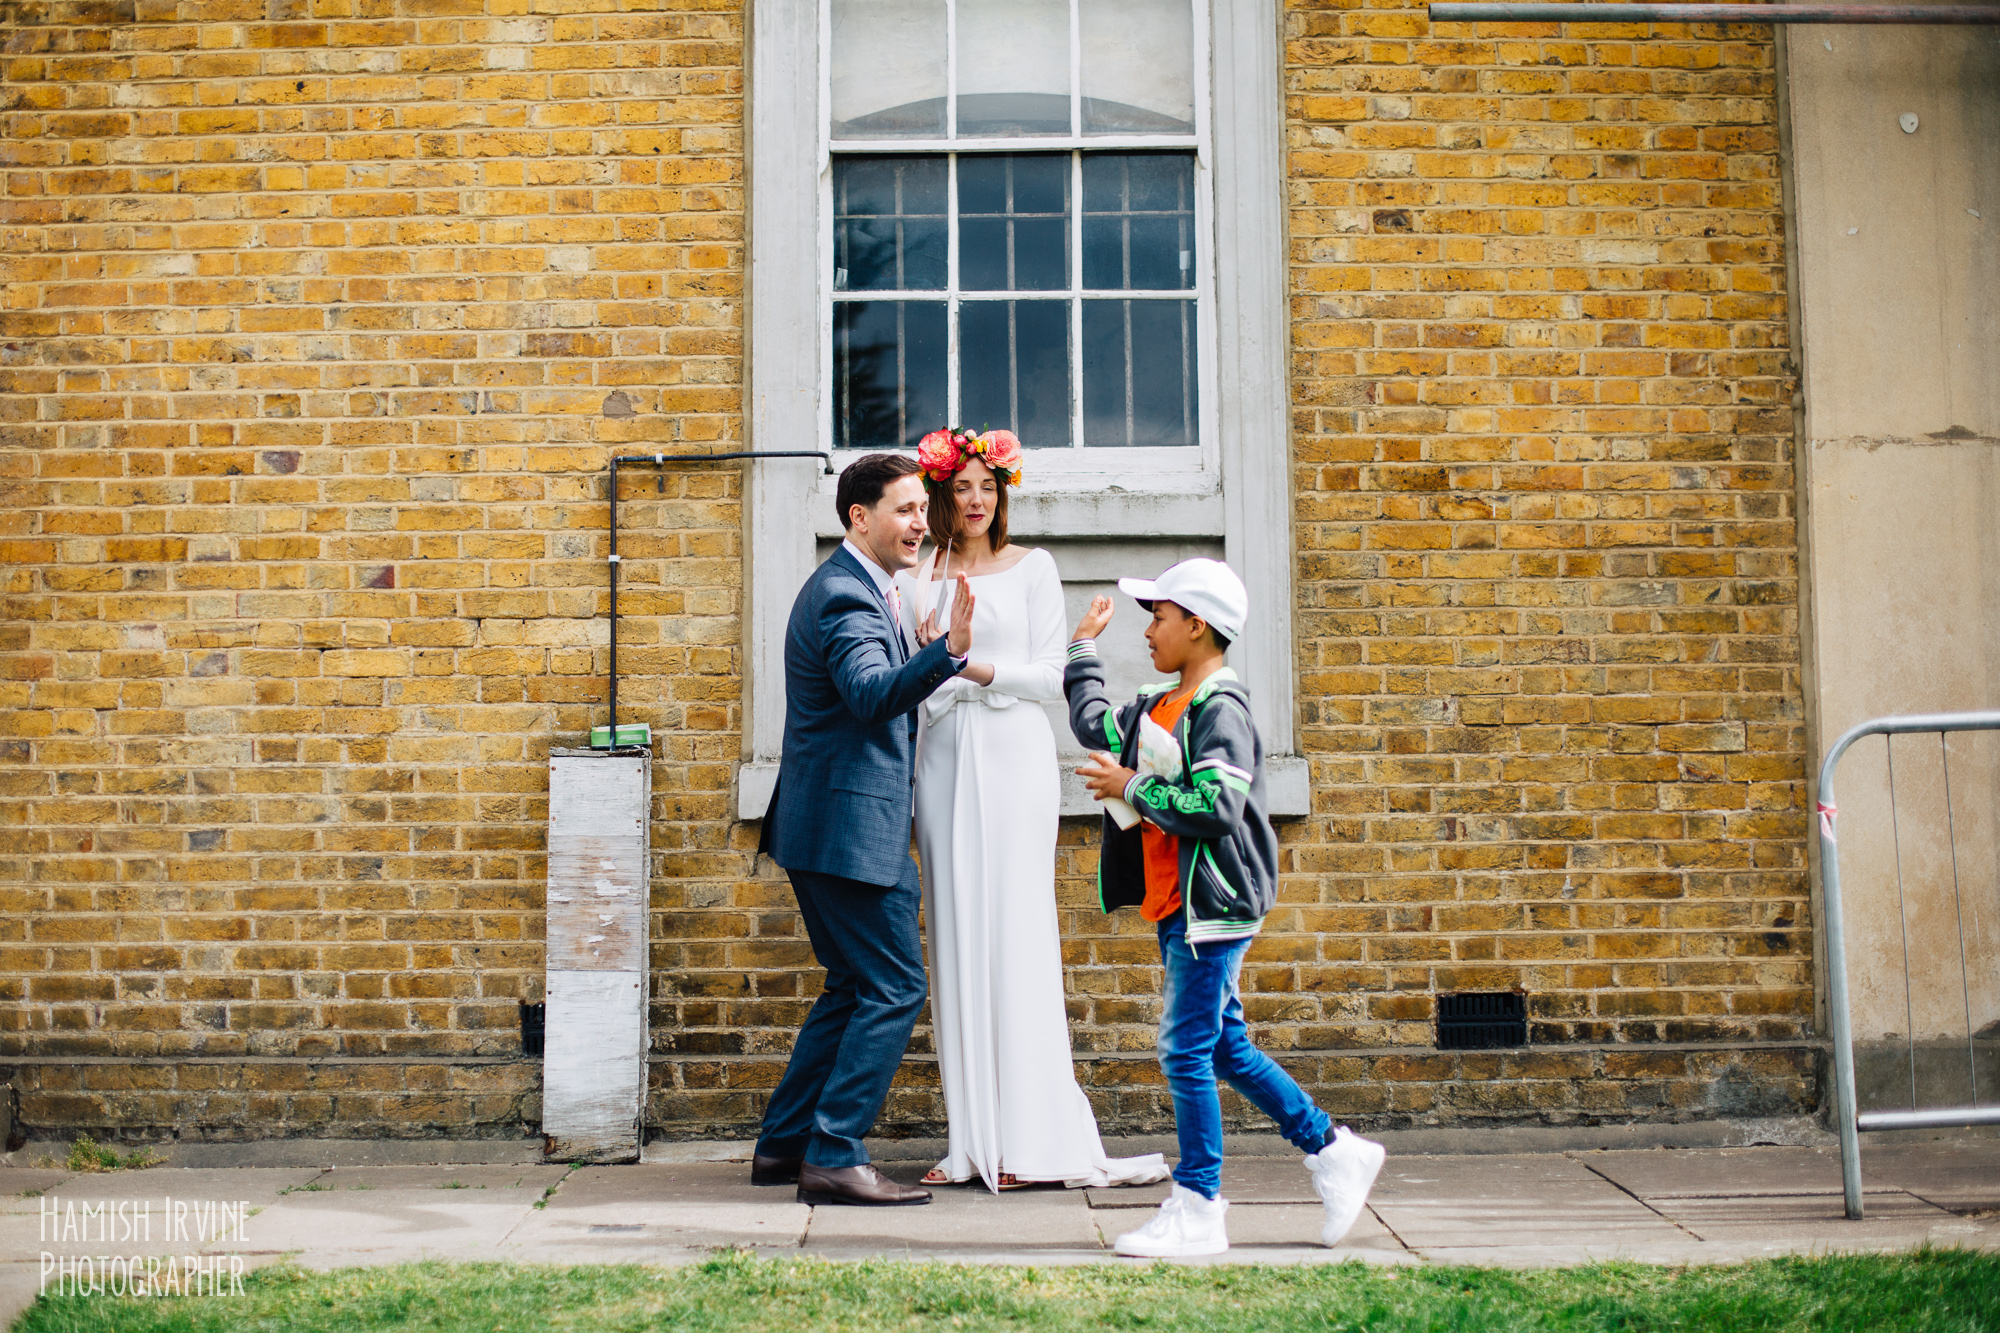 Hamish Irvine Photography, photographer, London wedding photographer, Asylum chapel, Drift Bar, Katie and Nate's wedding, 